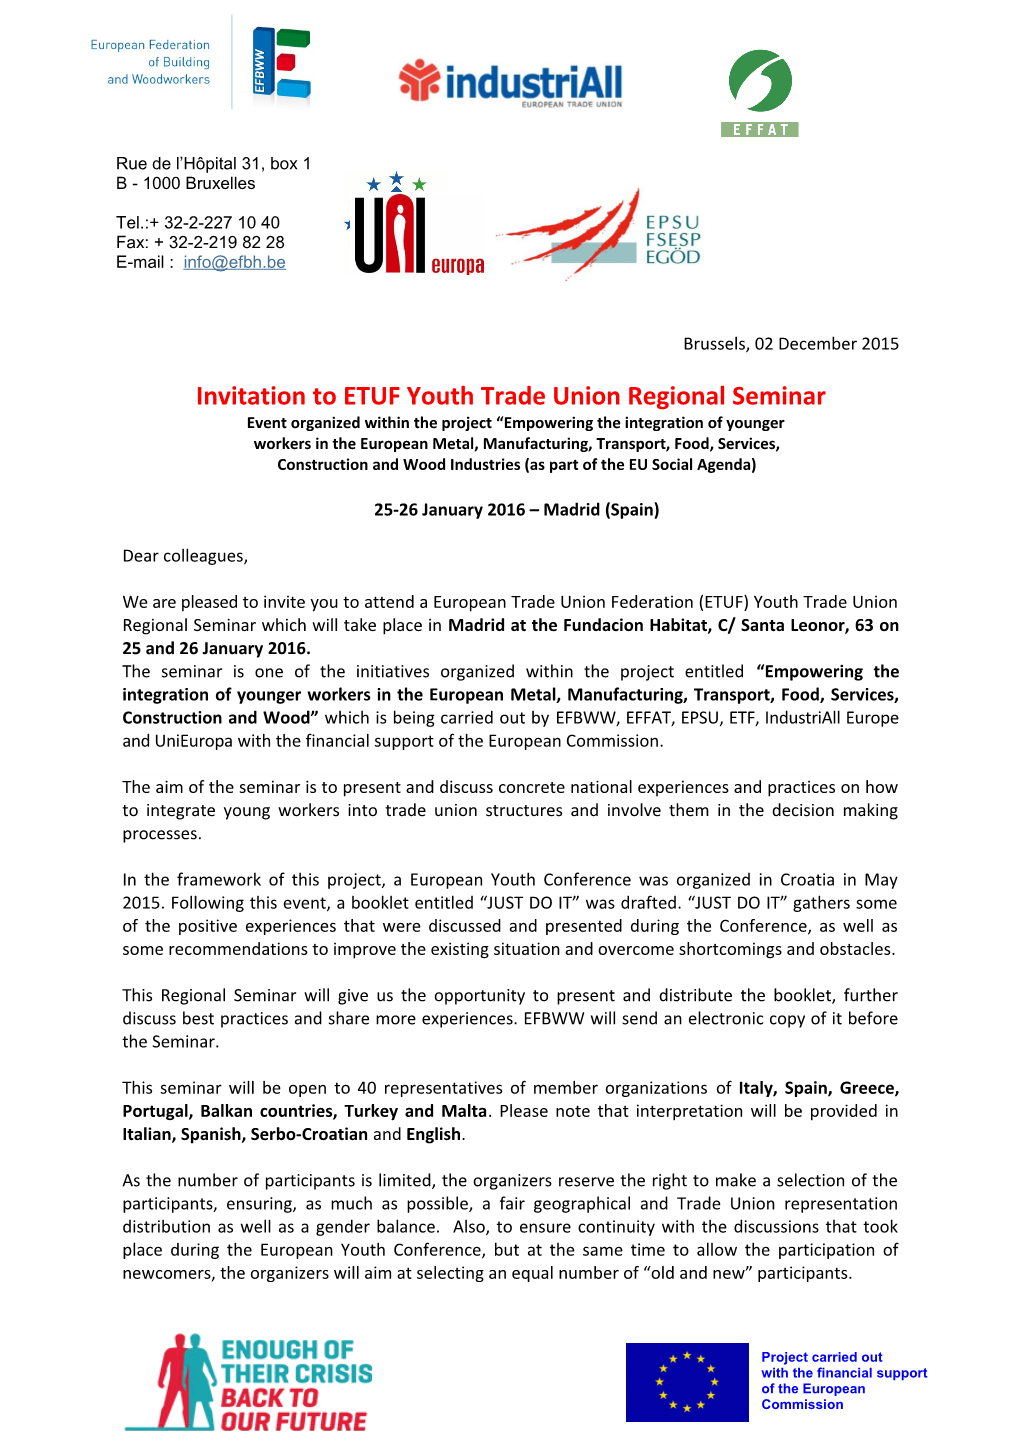 Invitation to Etufyouth Trade Union Regional Seminar